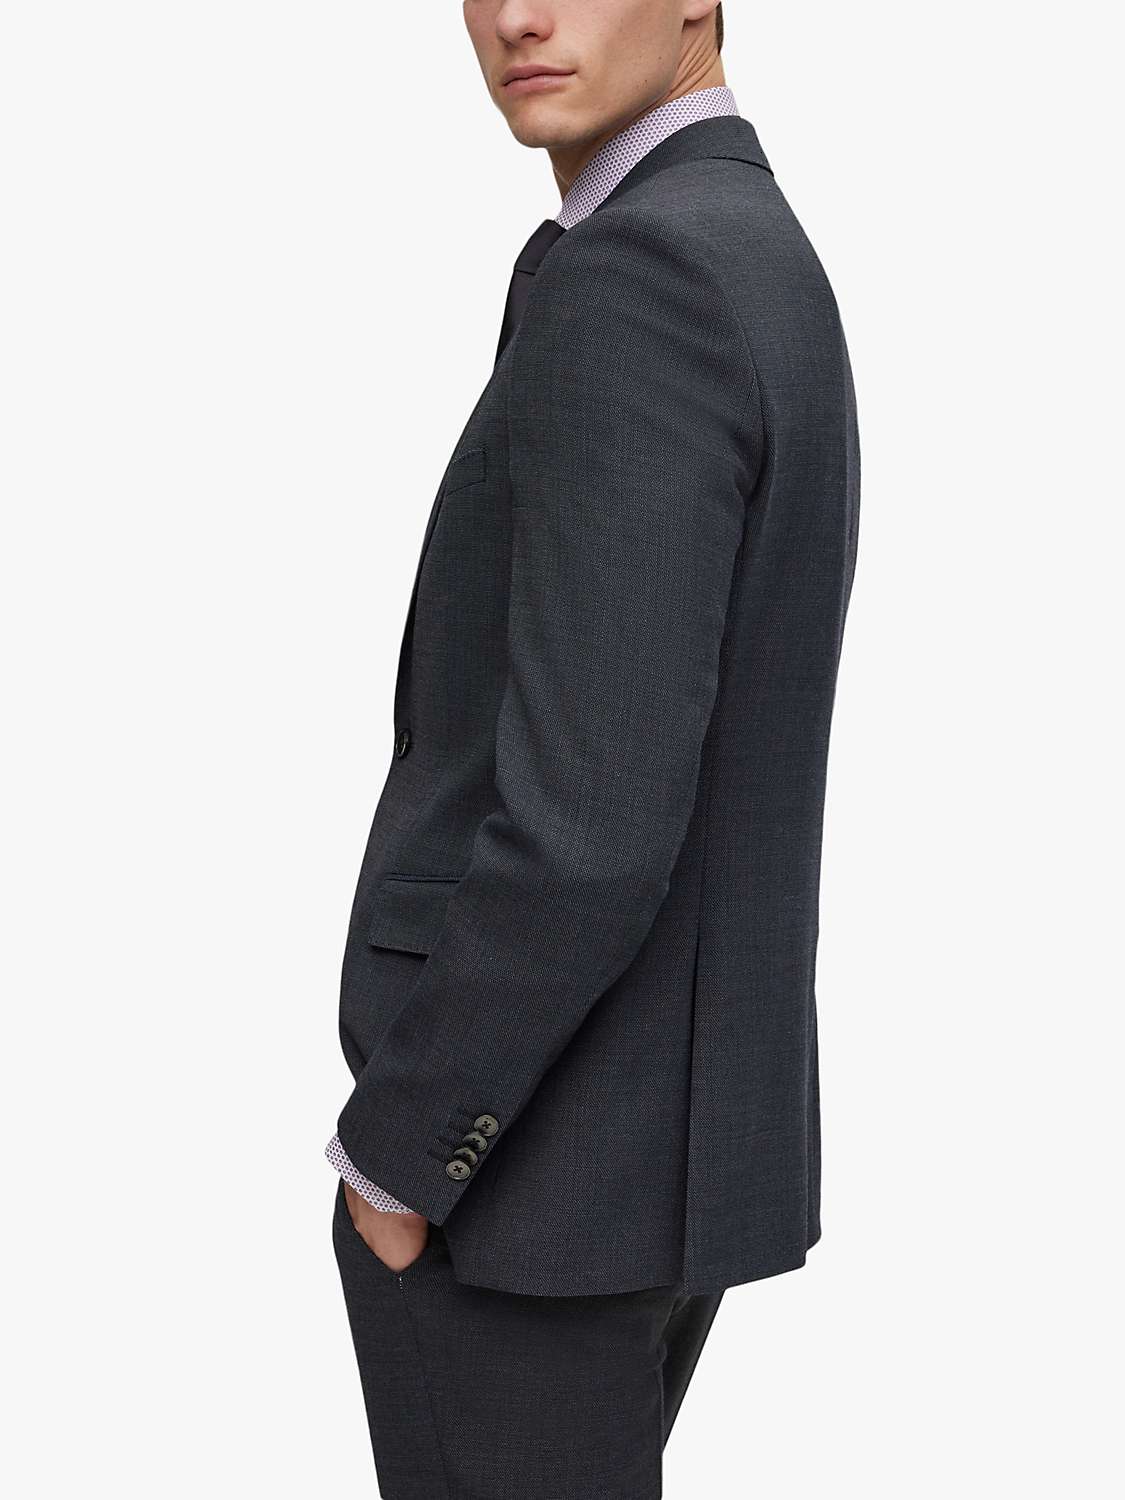 Buy HUGO BOSS Jasper Wool Blend Suit Jacket Online at johnlewis.com